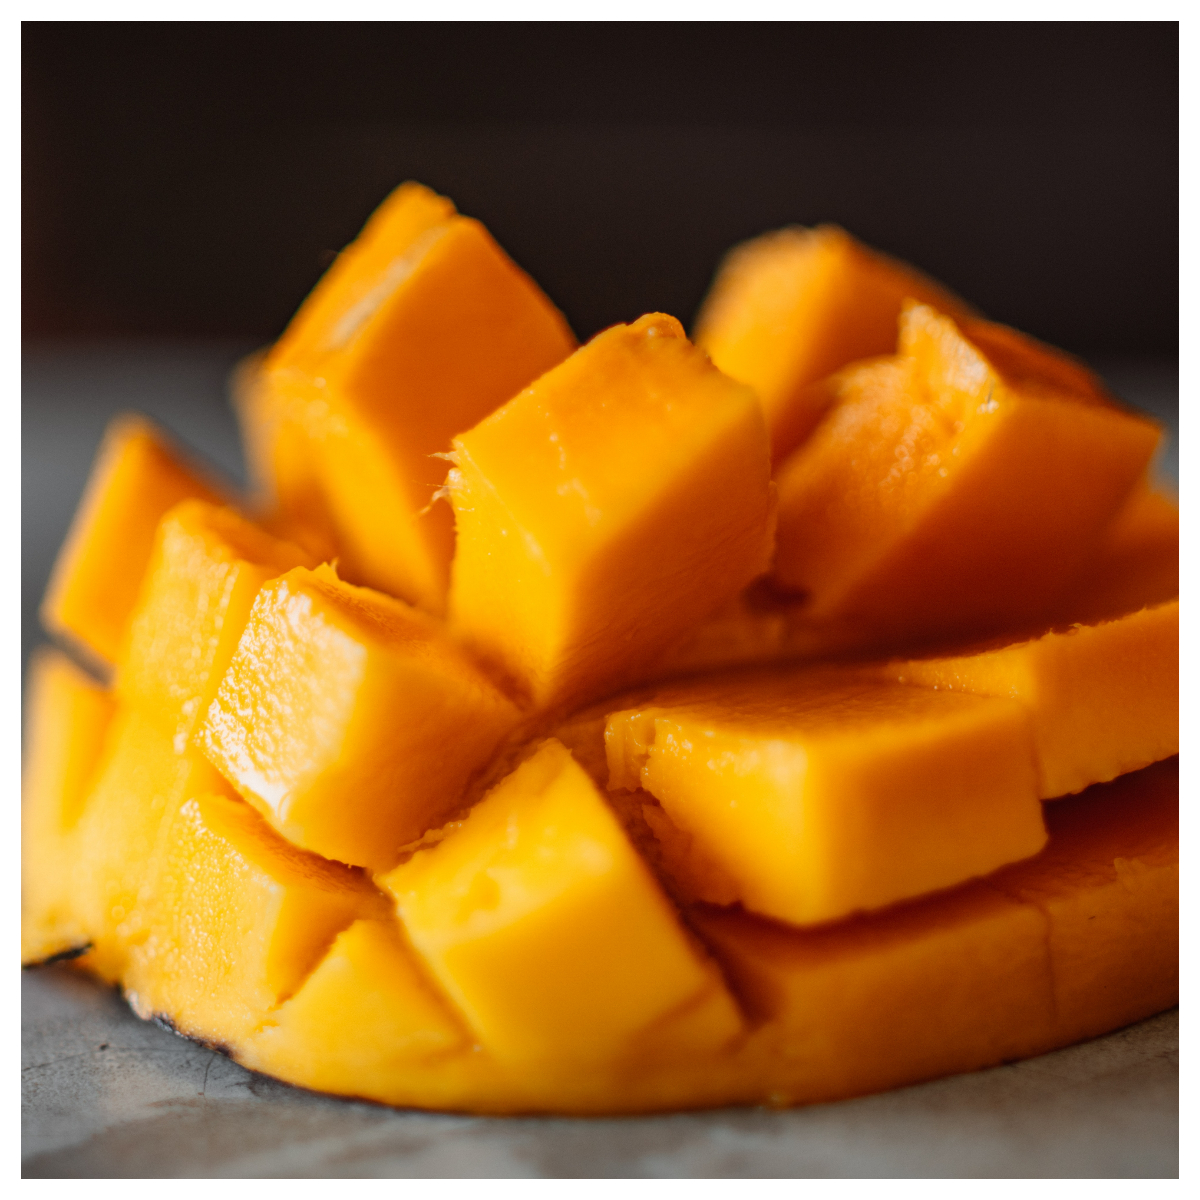 13 wonderful health benefits of mango that will amaze you